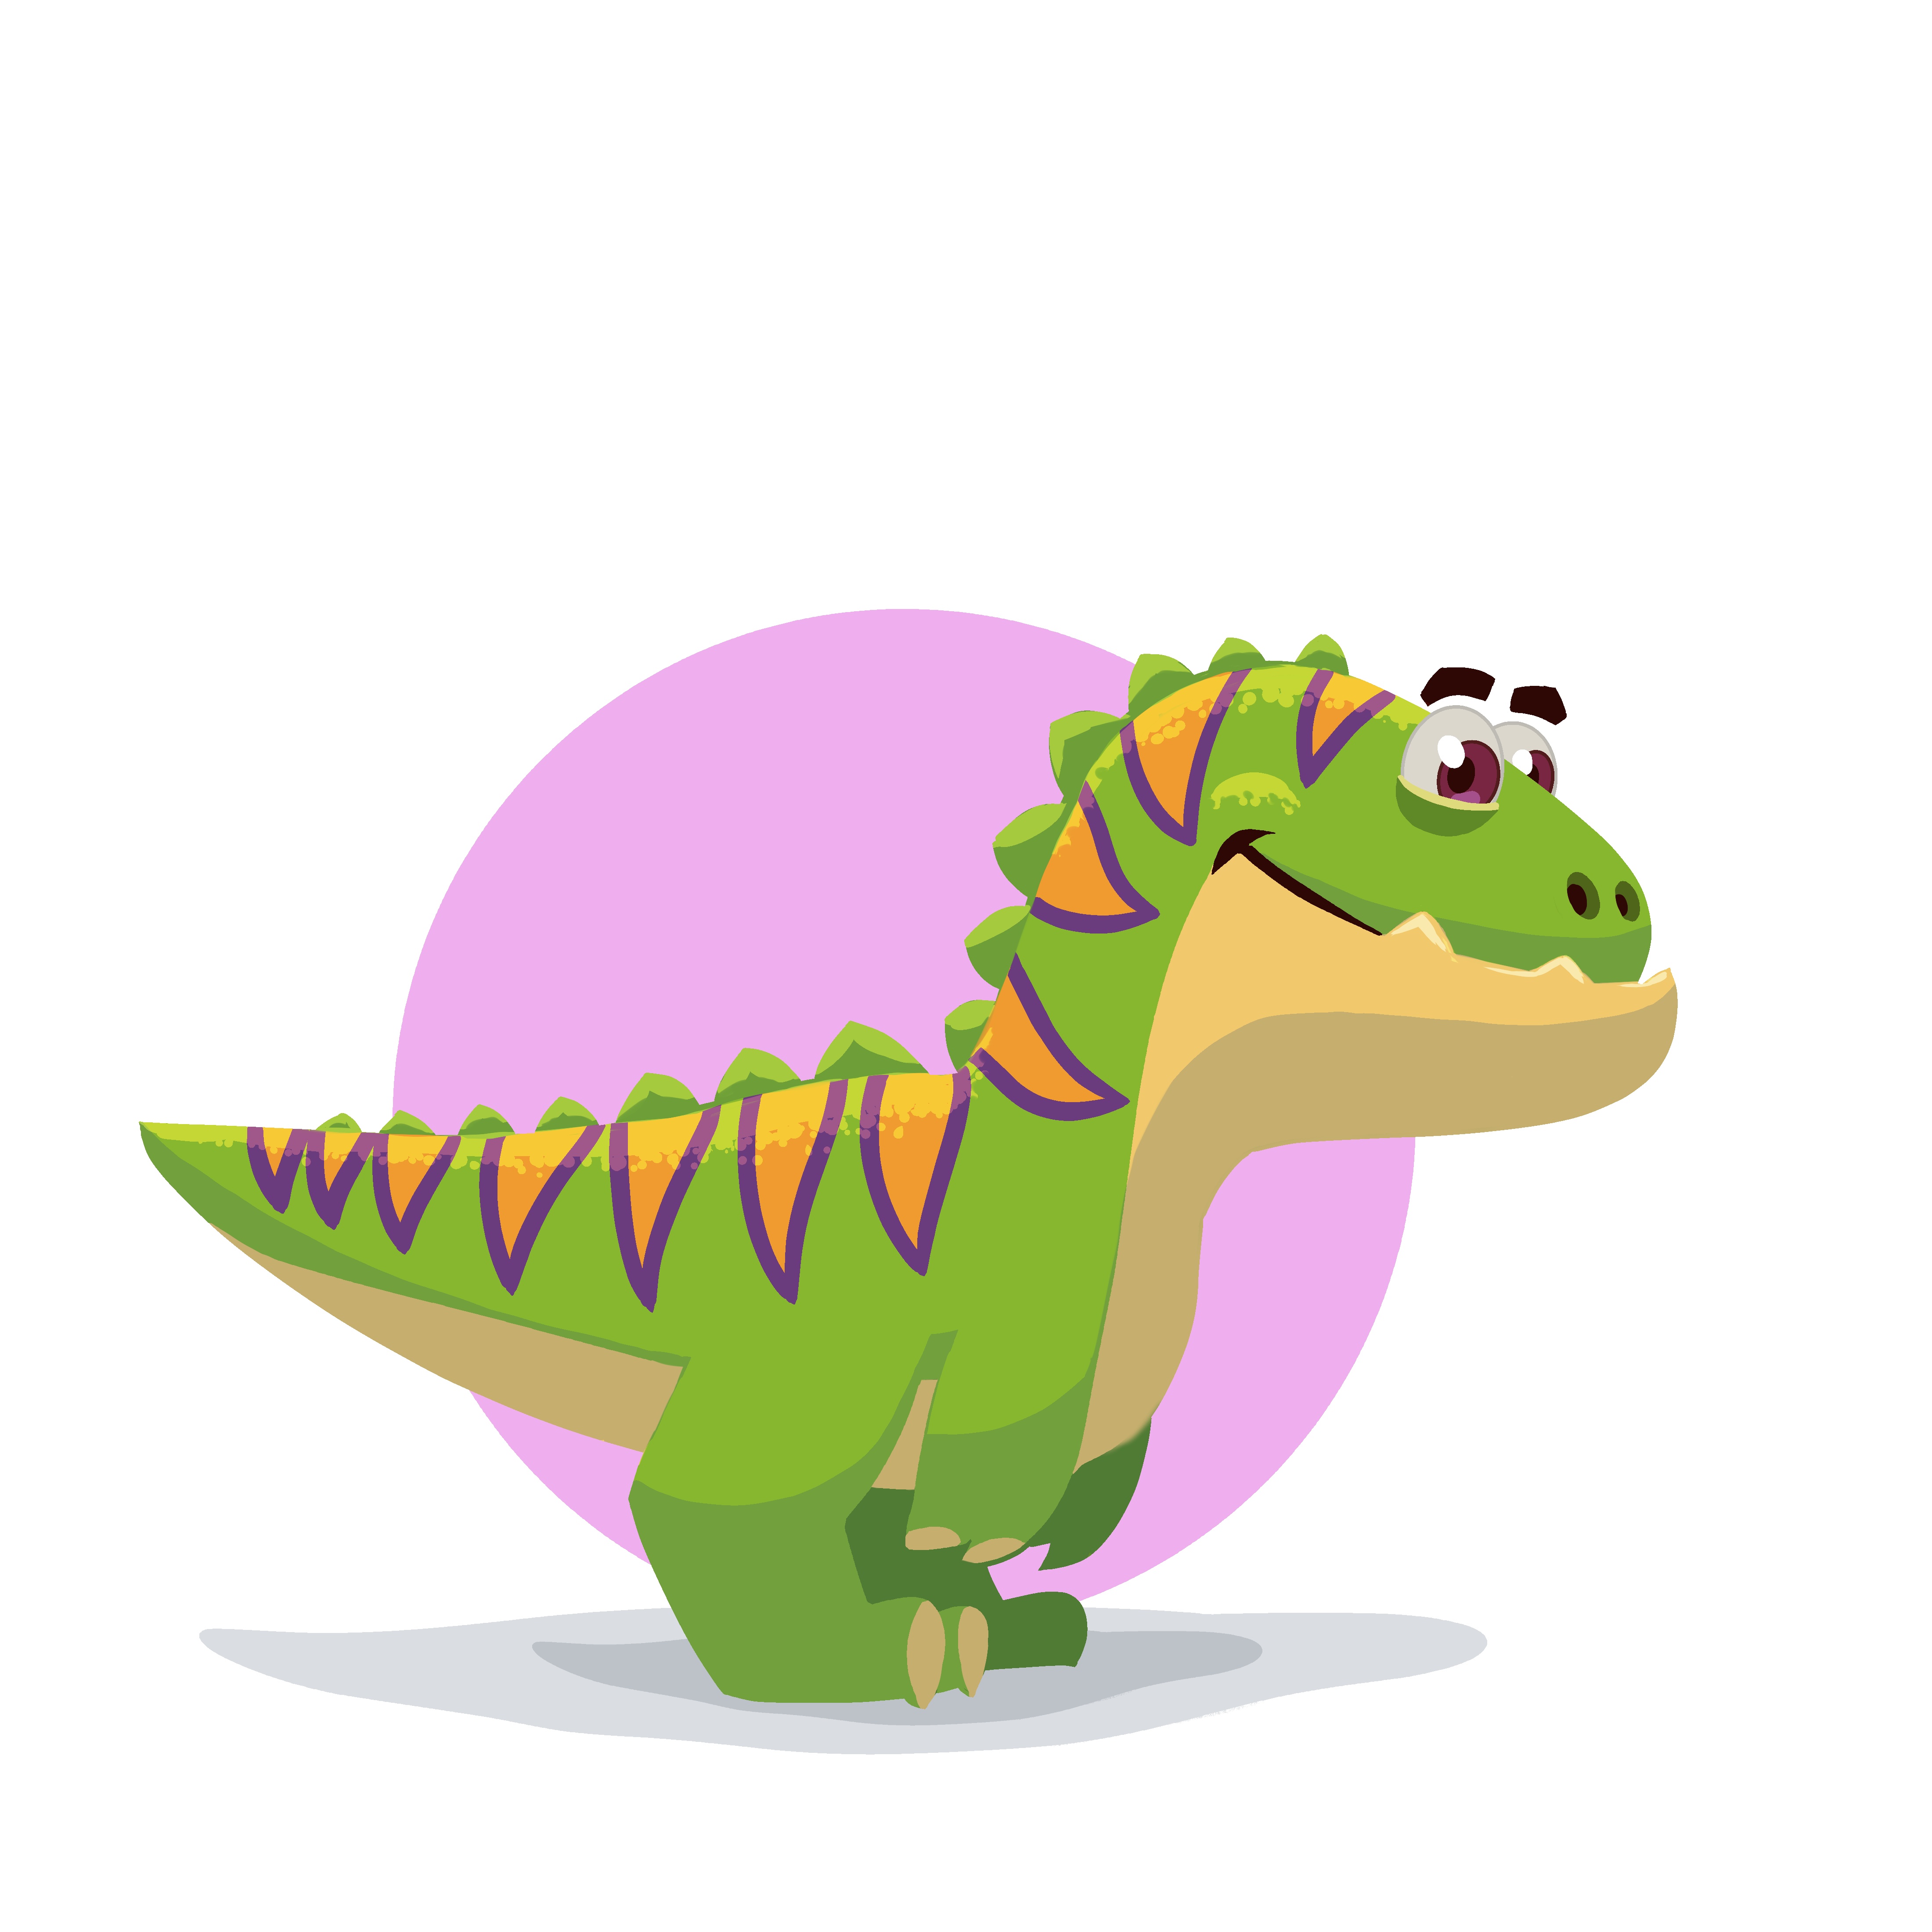 Professional Illustration for Children's Books, Games, and Education - Tyranosaurus